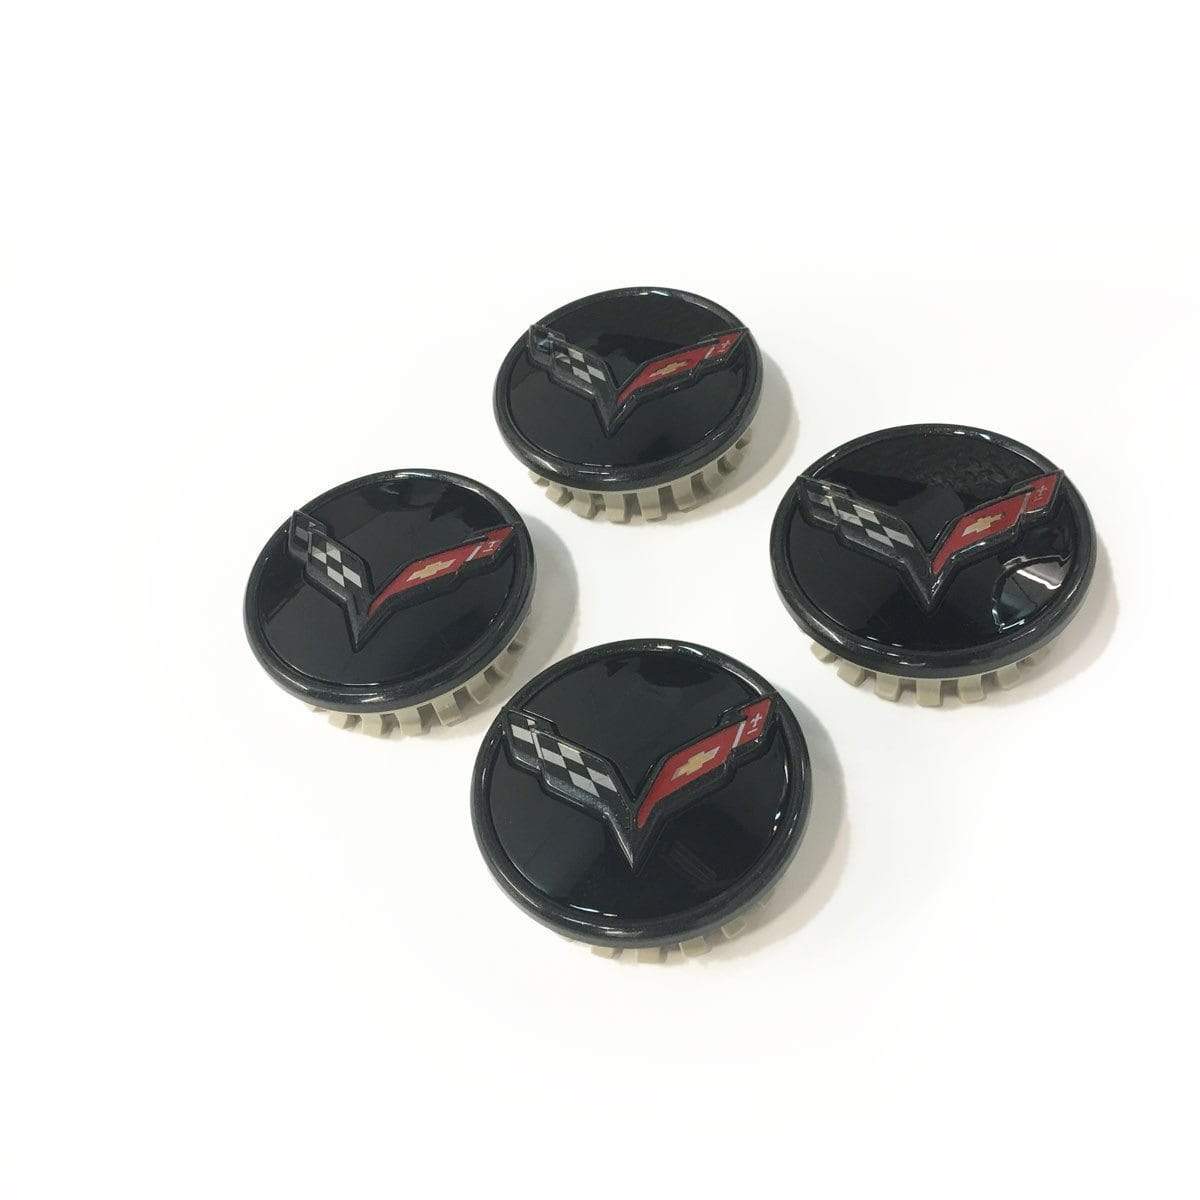 Black Wheel Center Caps and Lug Nuts for C7 Corvette | Carbon Flash Black Trim Ring | ACS Composite | SKU 45-4-175/45-4-176